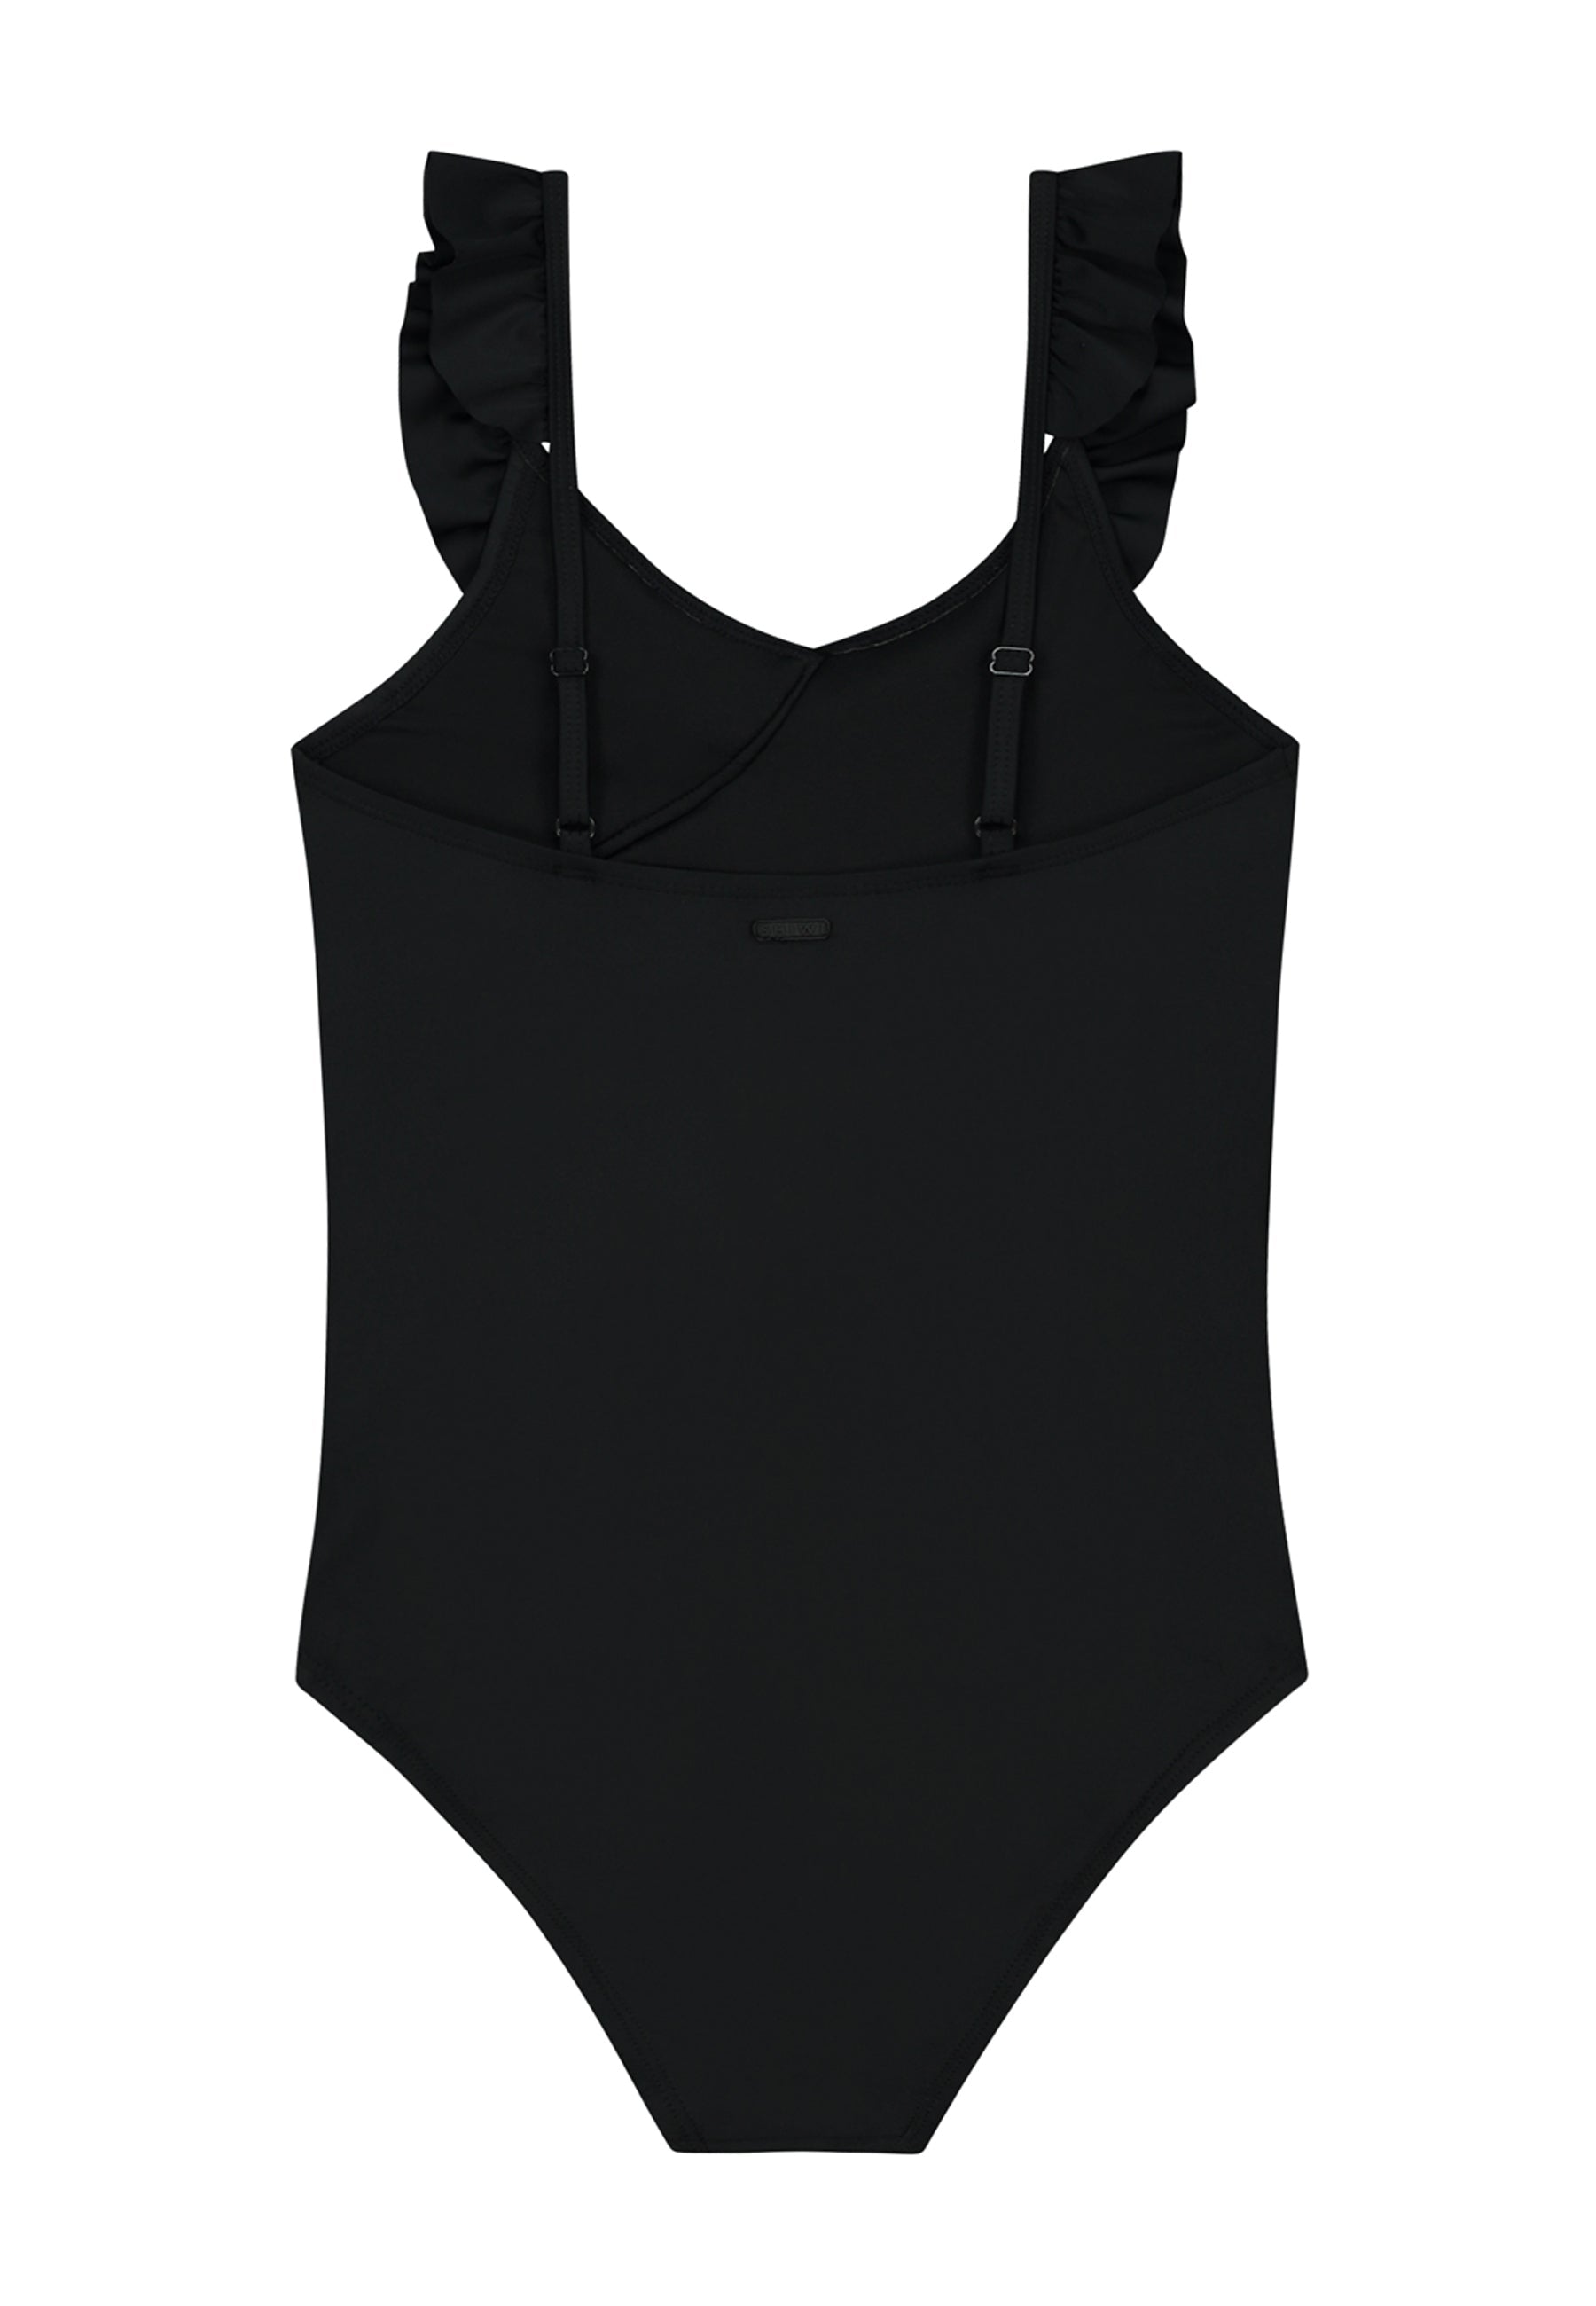 Meisjes ROSA swimsuit van Shiwi in de kleur black in maat 134-140.